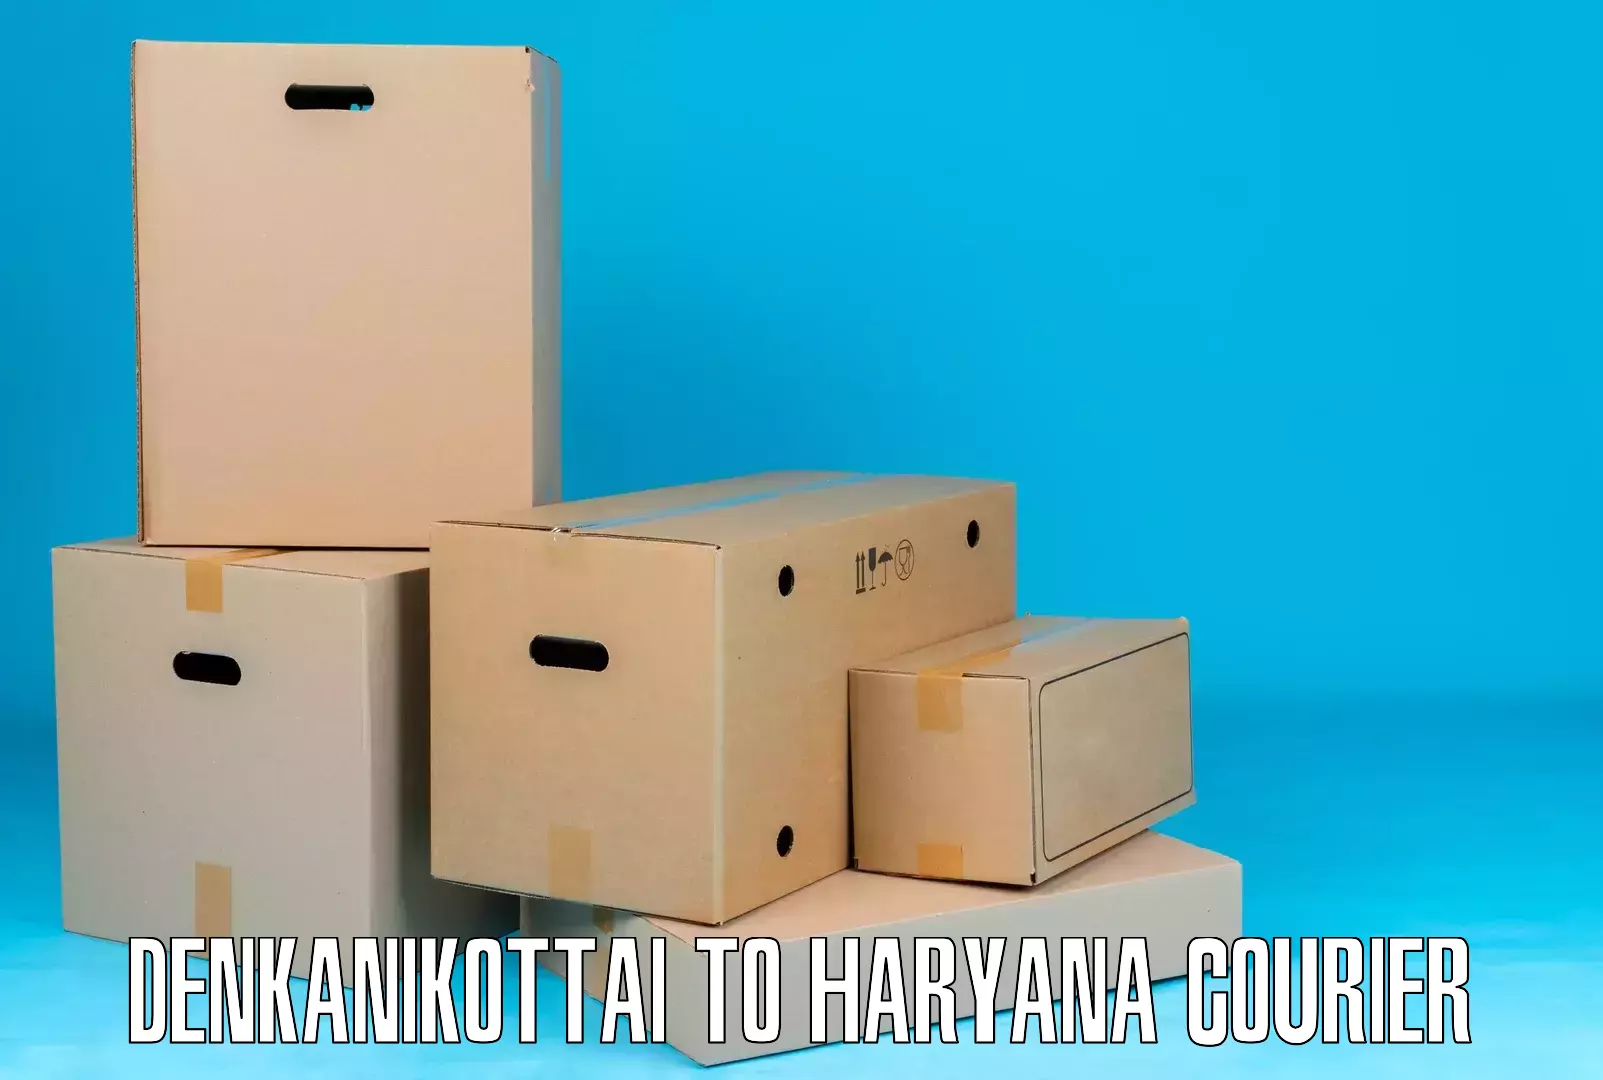 On-demand delivery Denkanikottai to Haryana